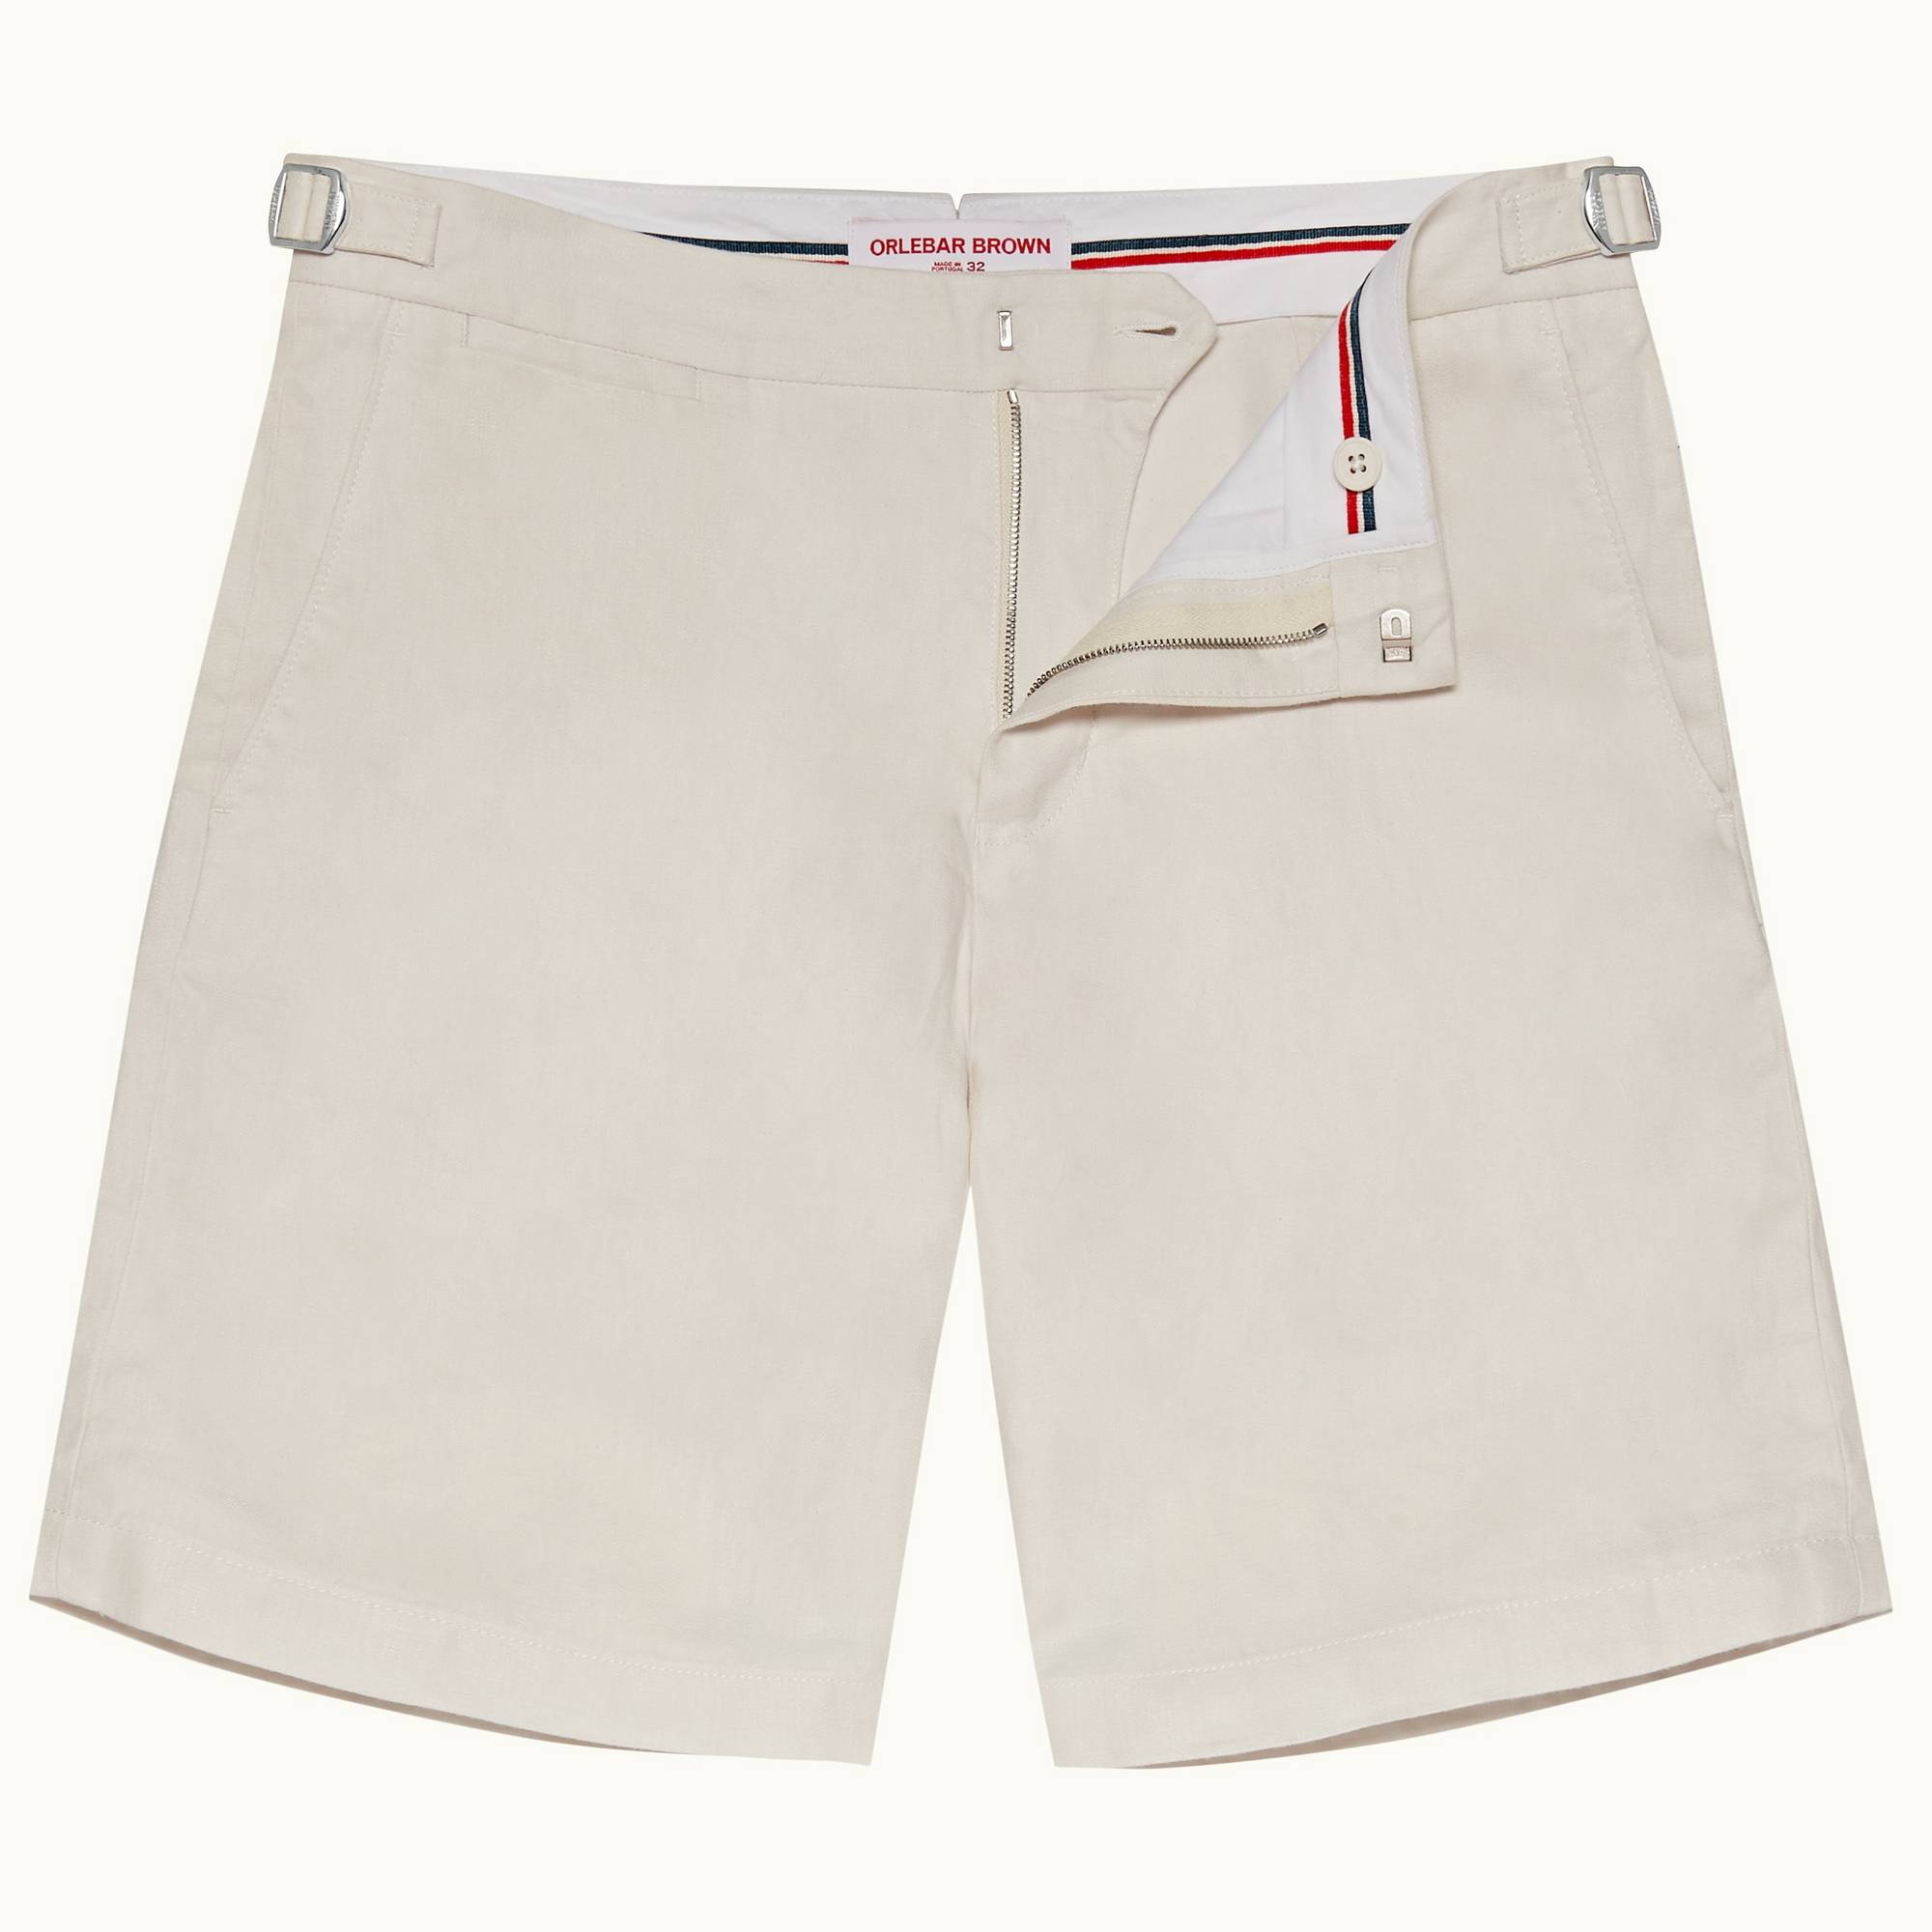 Norwich Linen - Mens White Sand Tailored Fit O.B Stripe Linen Shorts